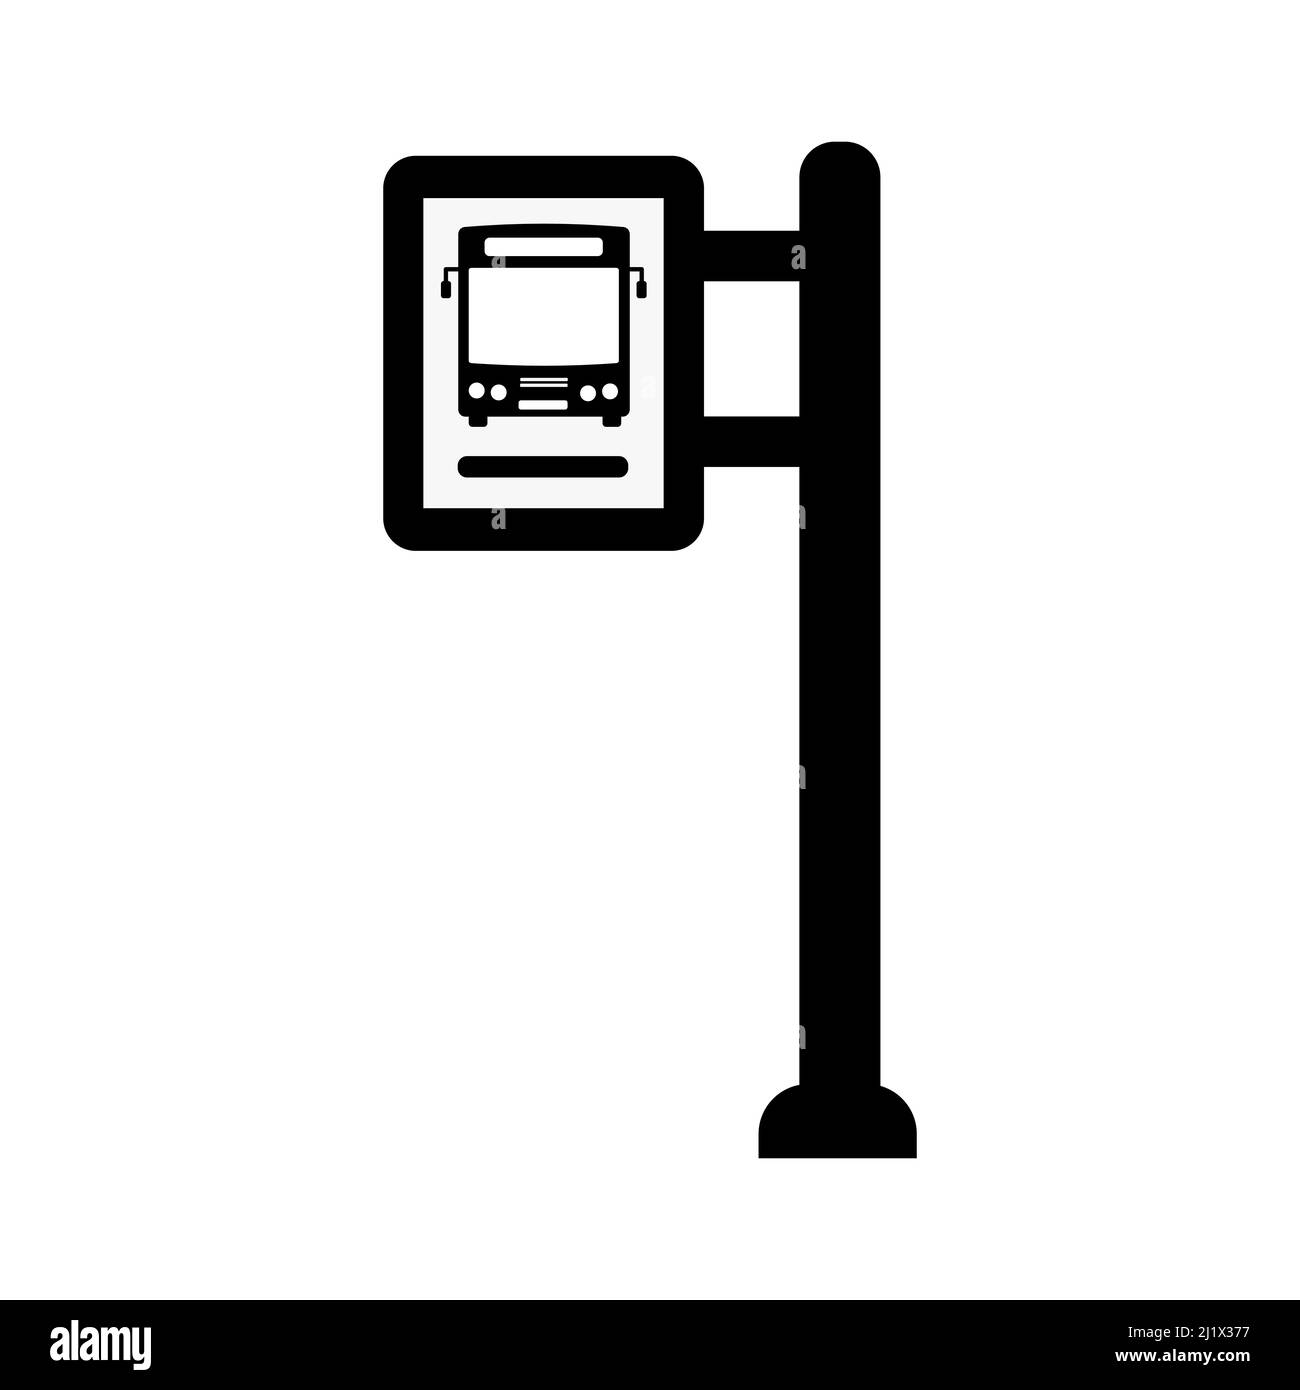 Bus stop icon design. Bus stop symbol icon in trendy flat style design. Vector illustration. Stock Vector